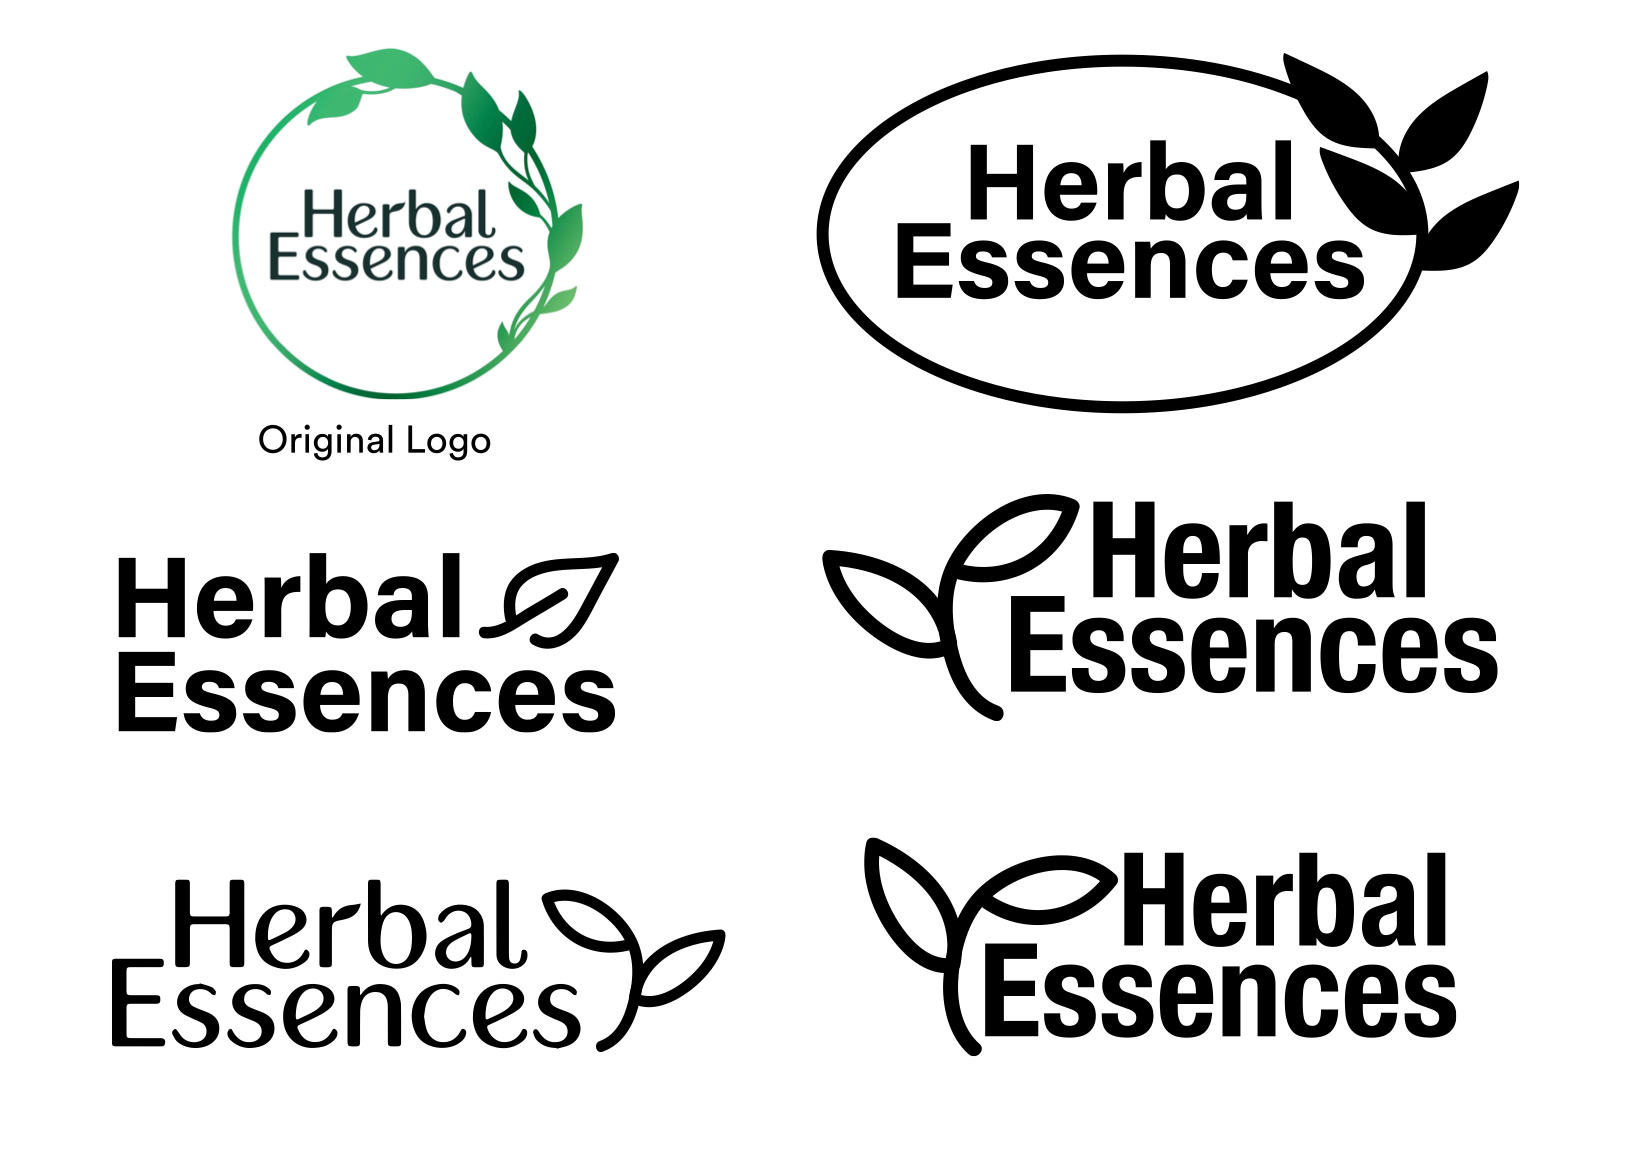 Herbal Essences Rebrand